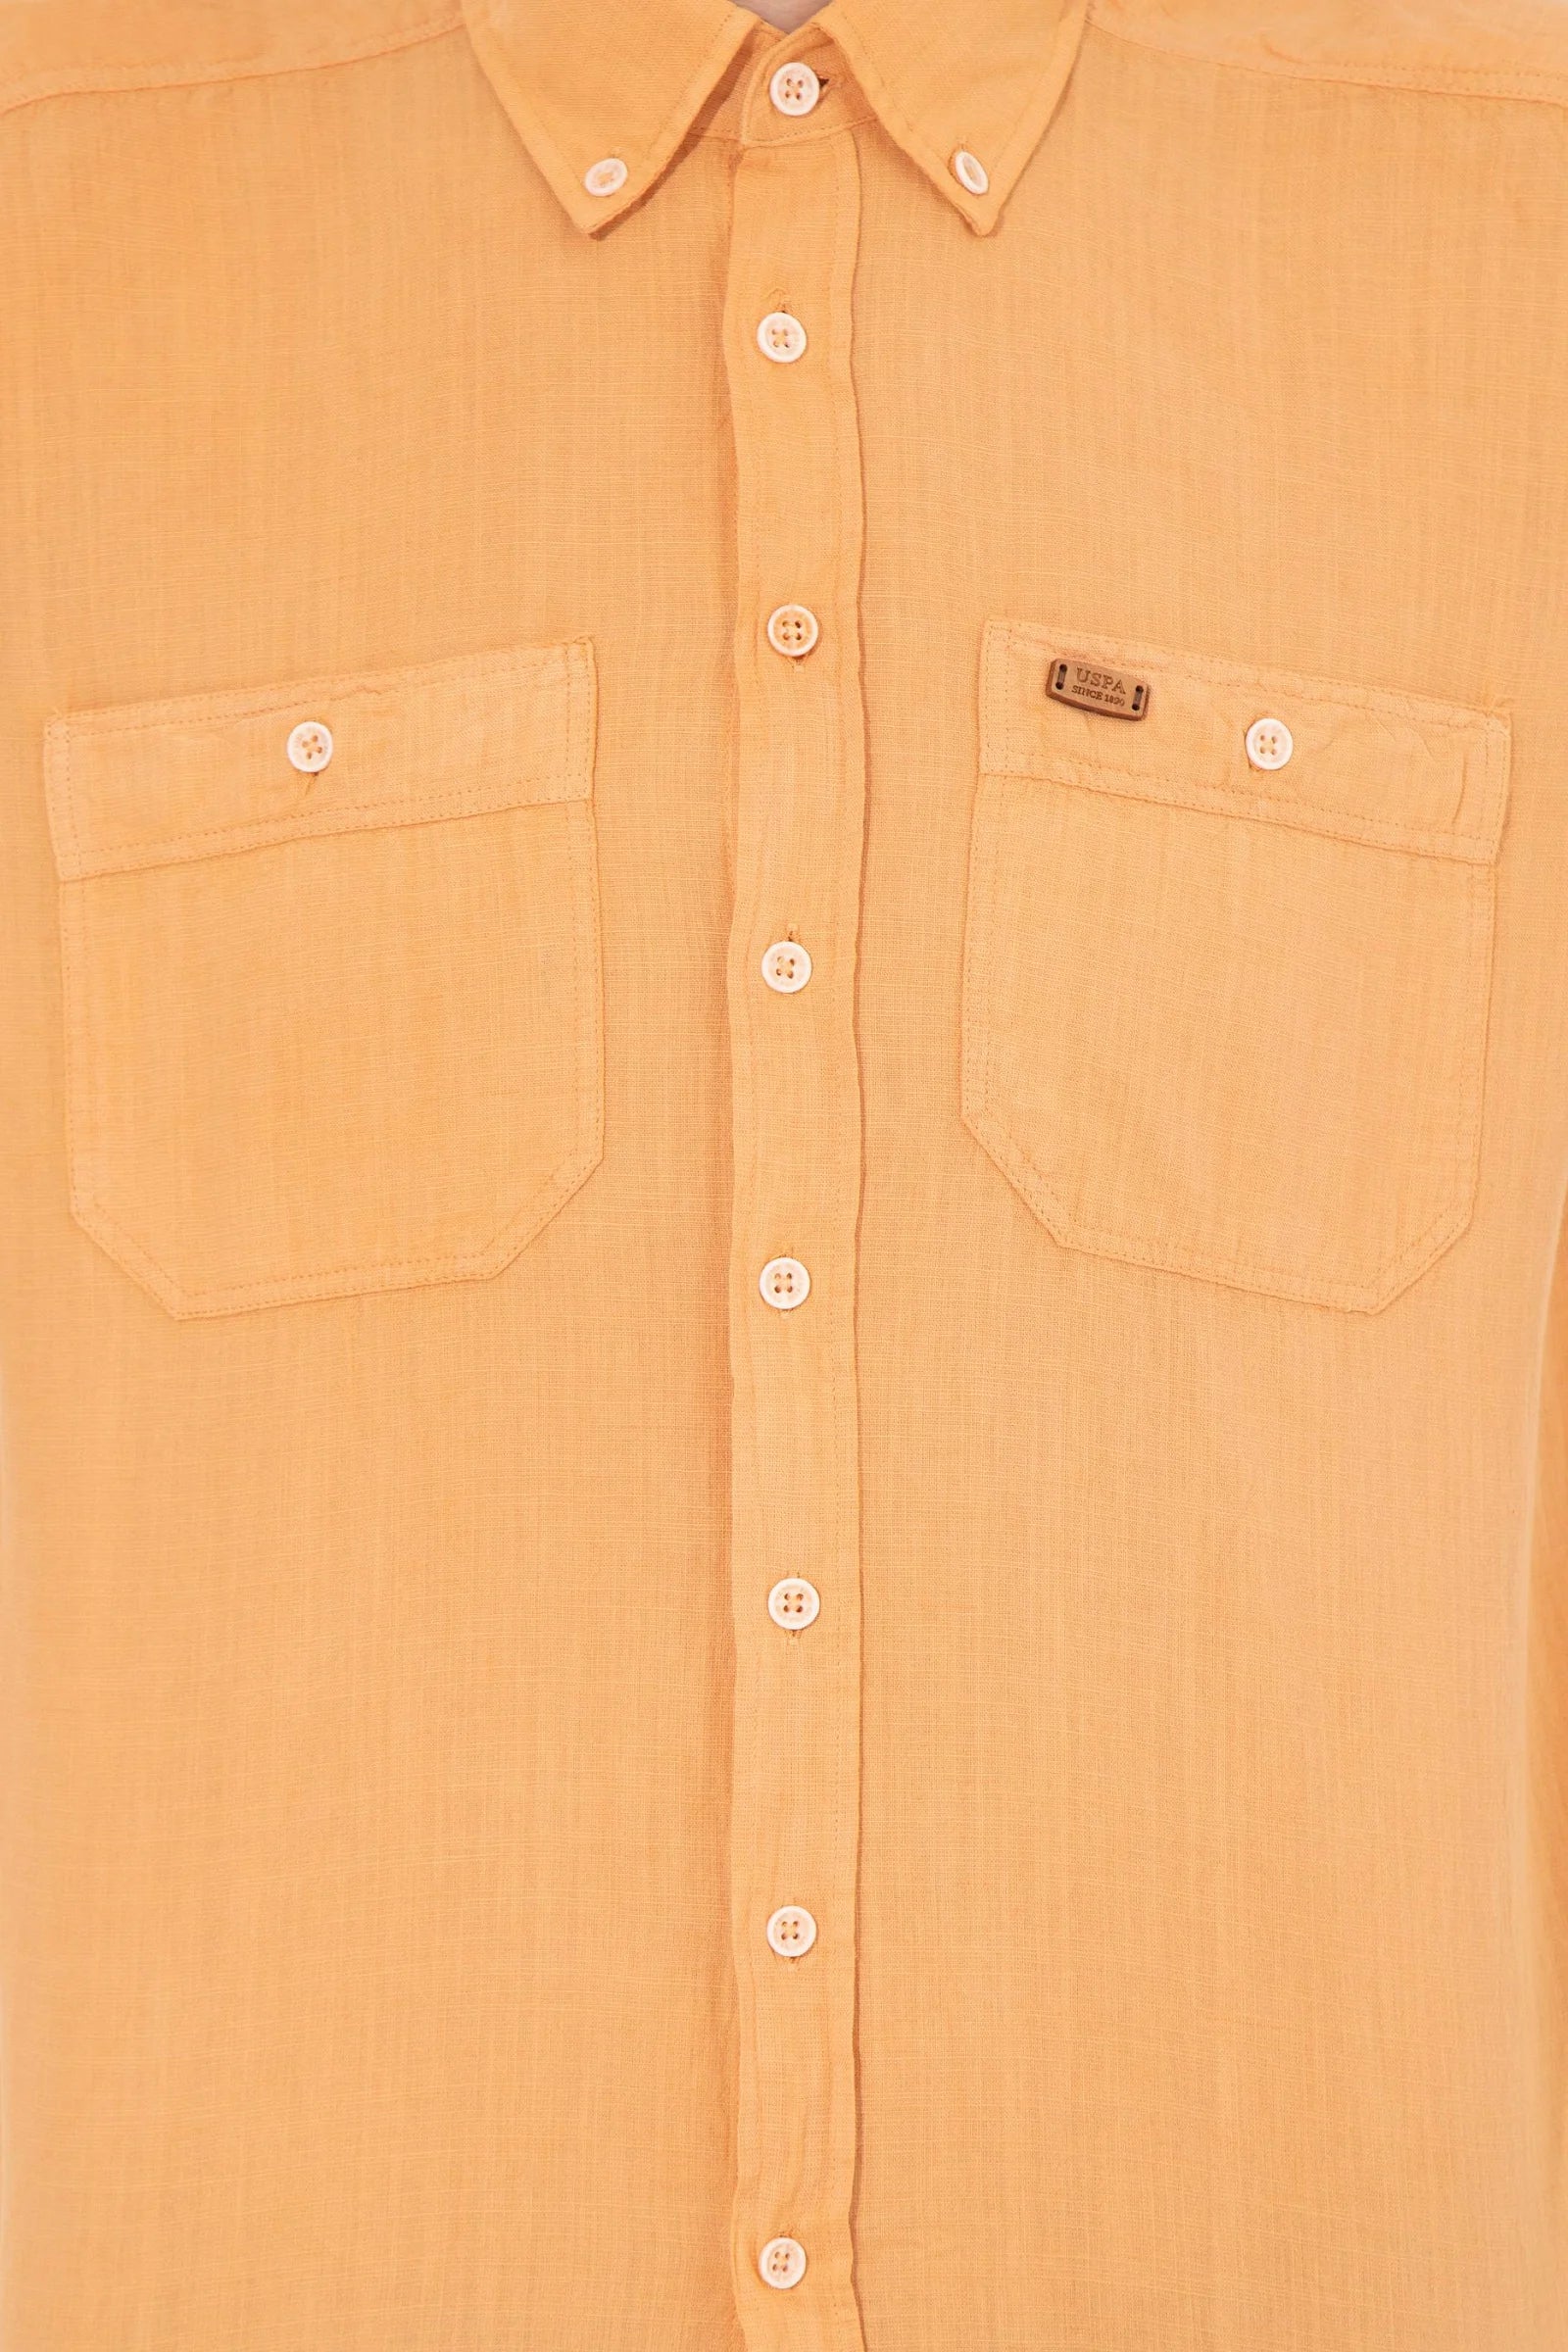 US Polo Assn. Long Sleeve Double Pocket Shirt - Men